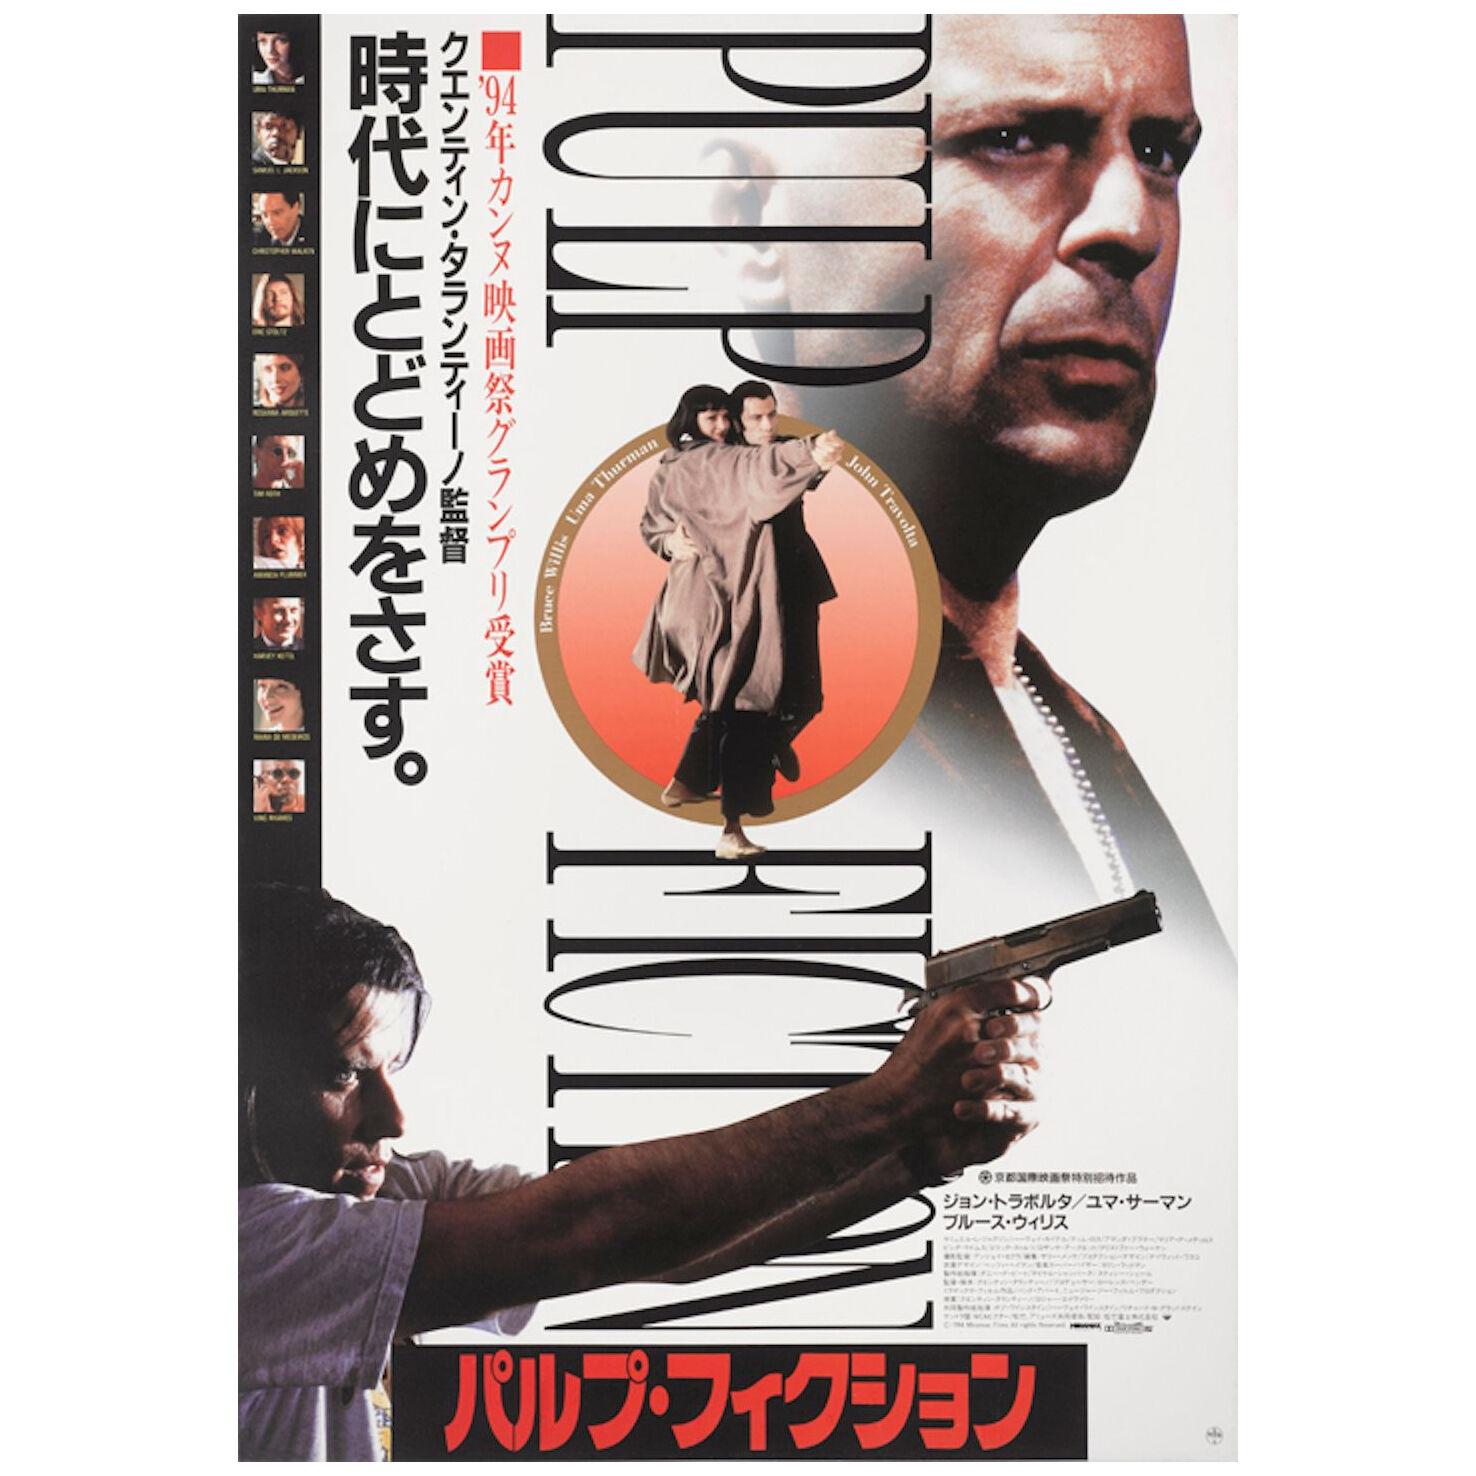 Original Japanese film poster - Pulp Fiction